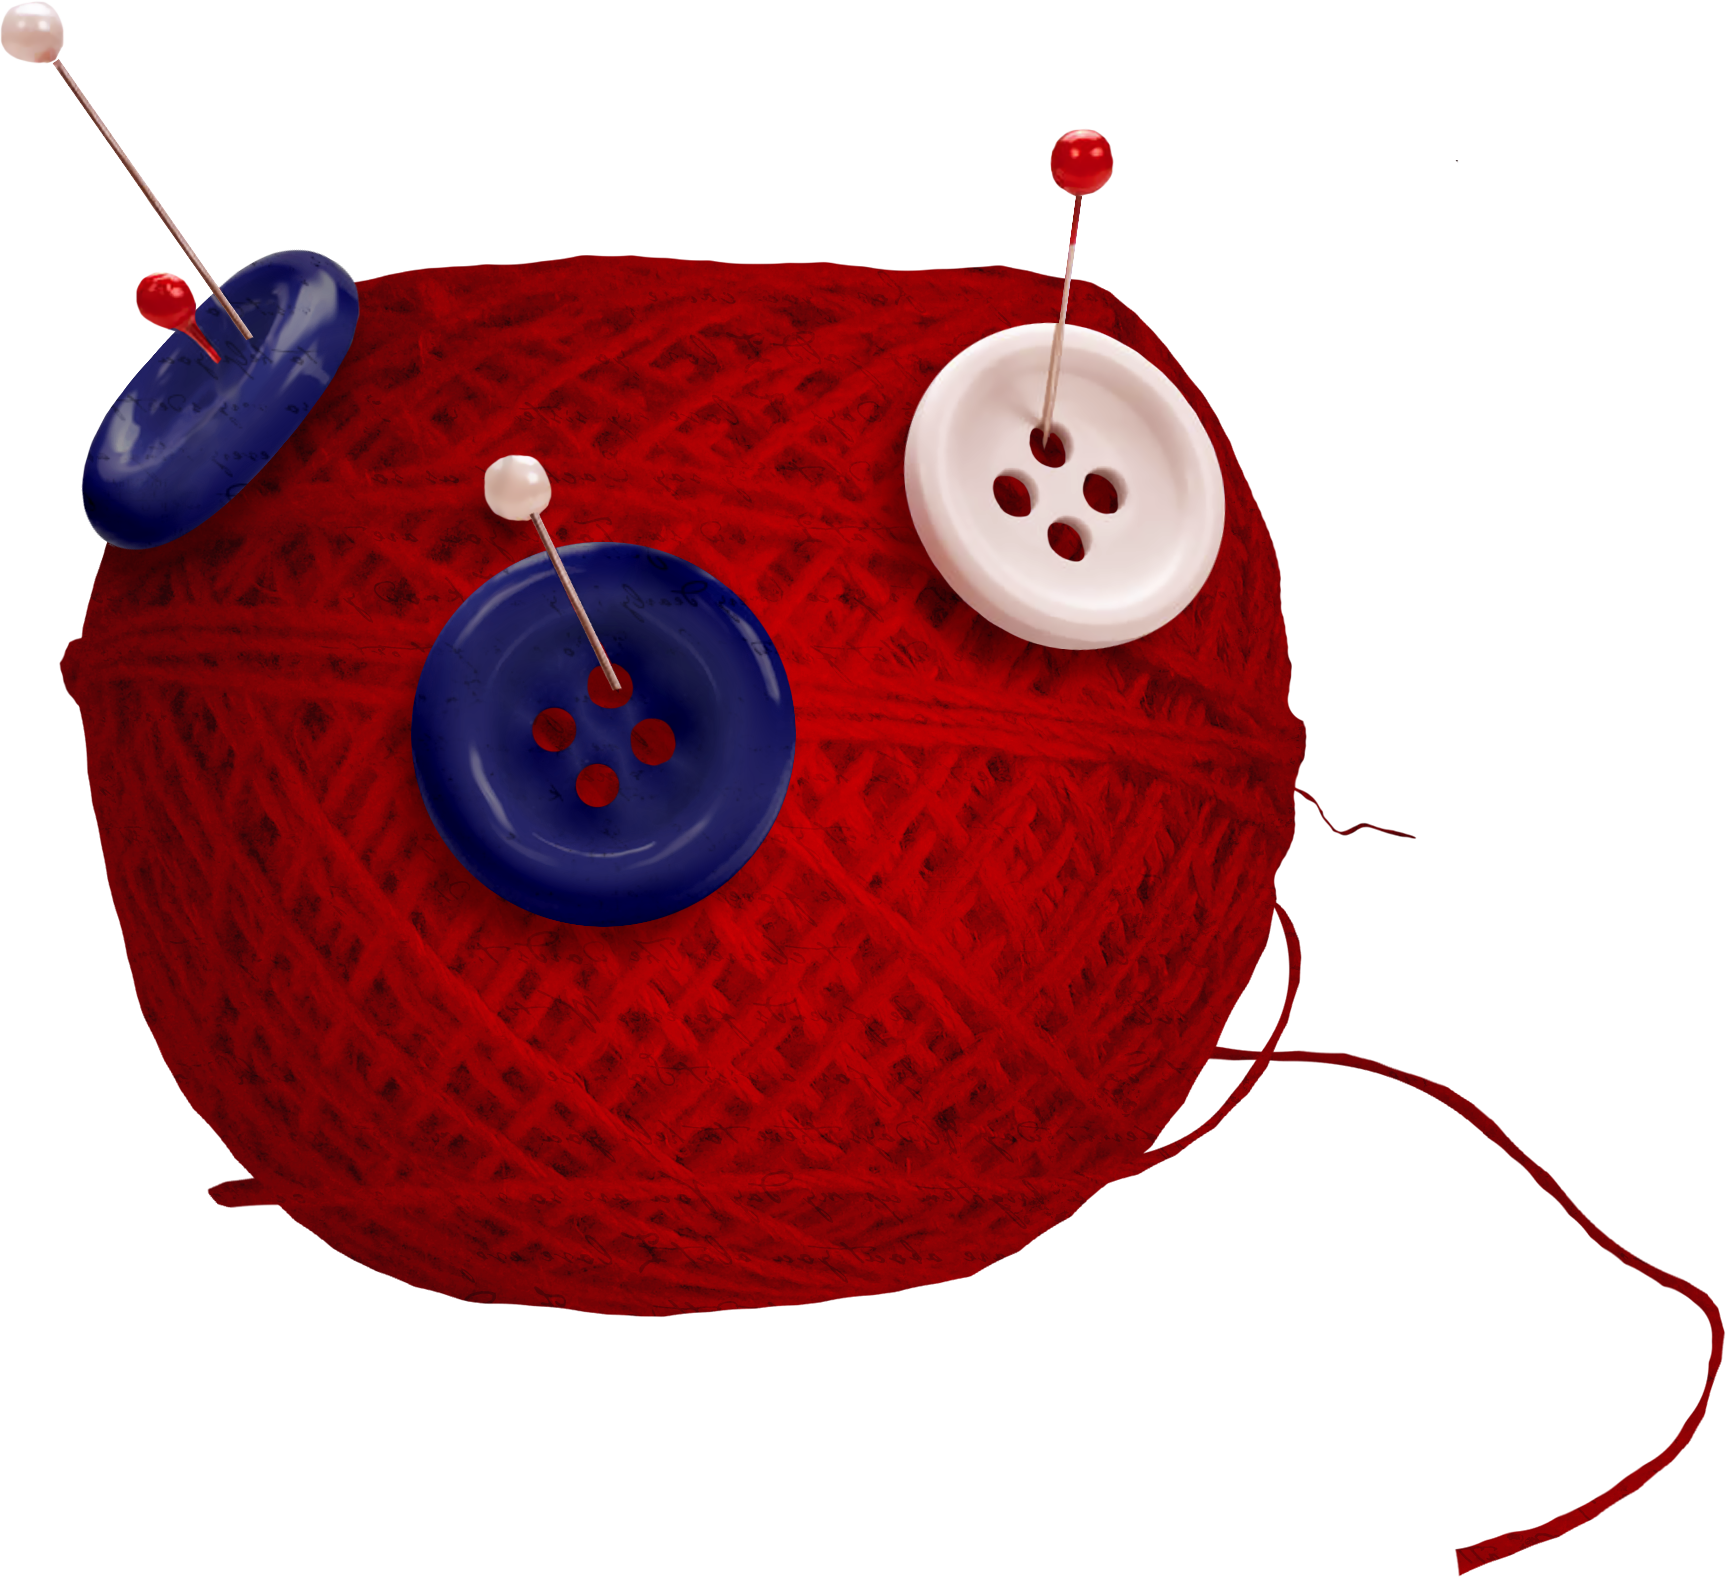 Ball yarn PNG